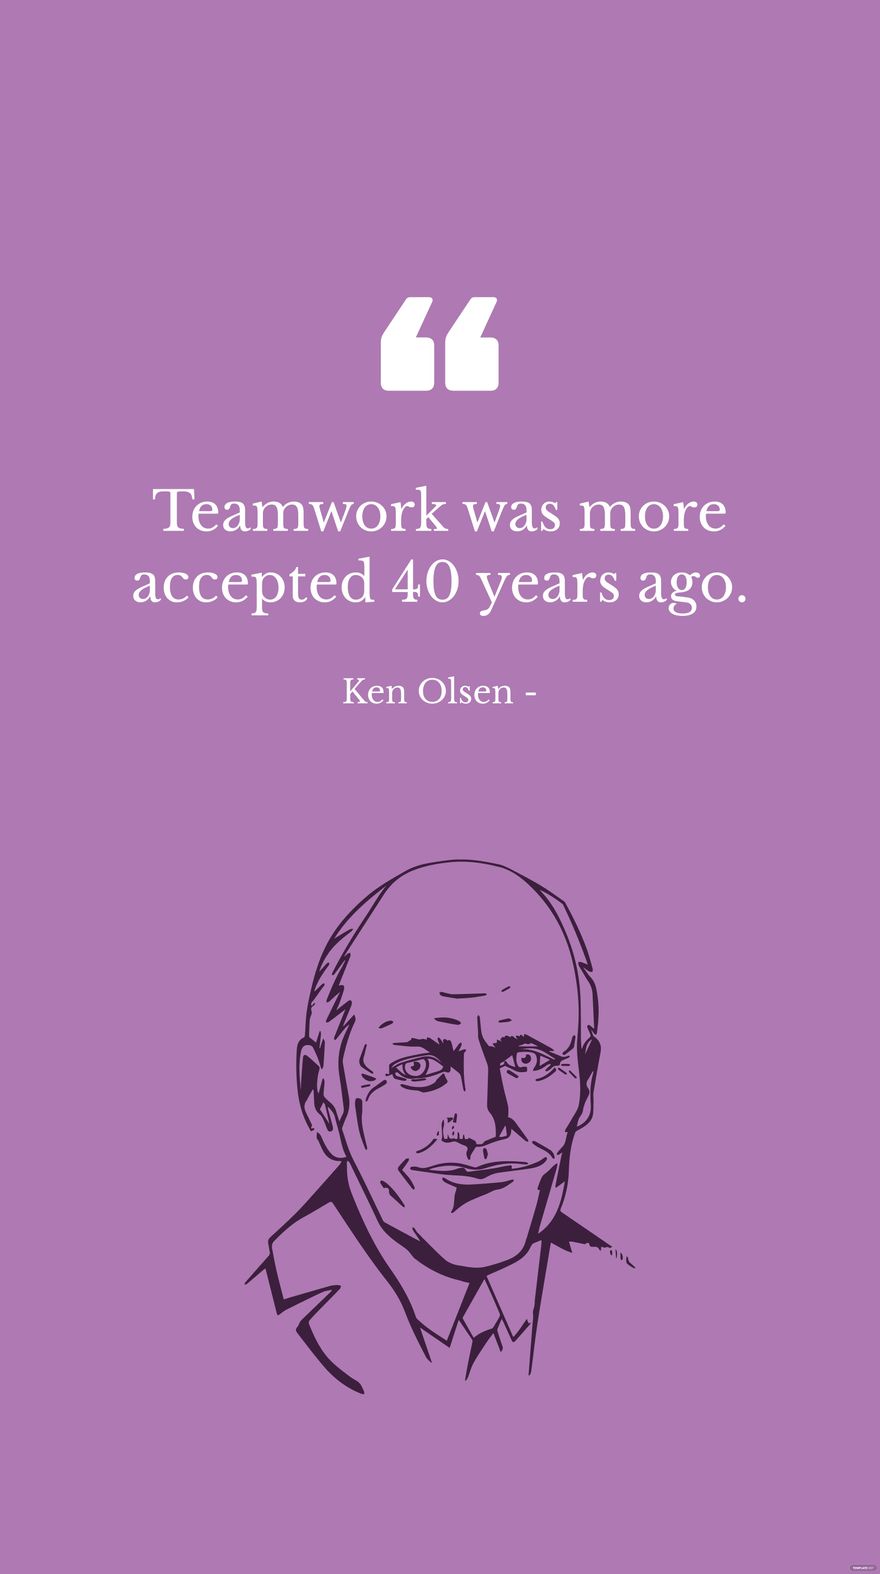 Ken Olsen - Teamwork was more accepted 40 years ago.